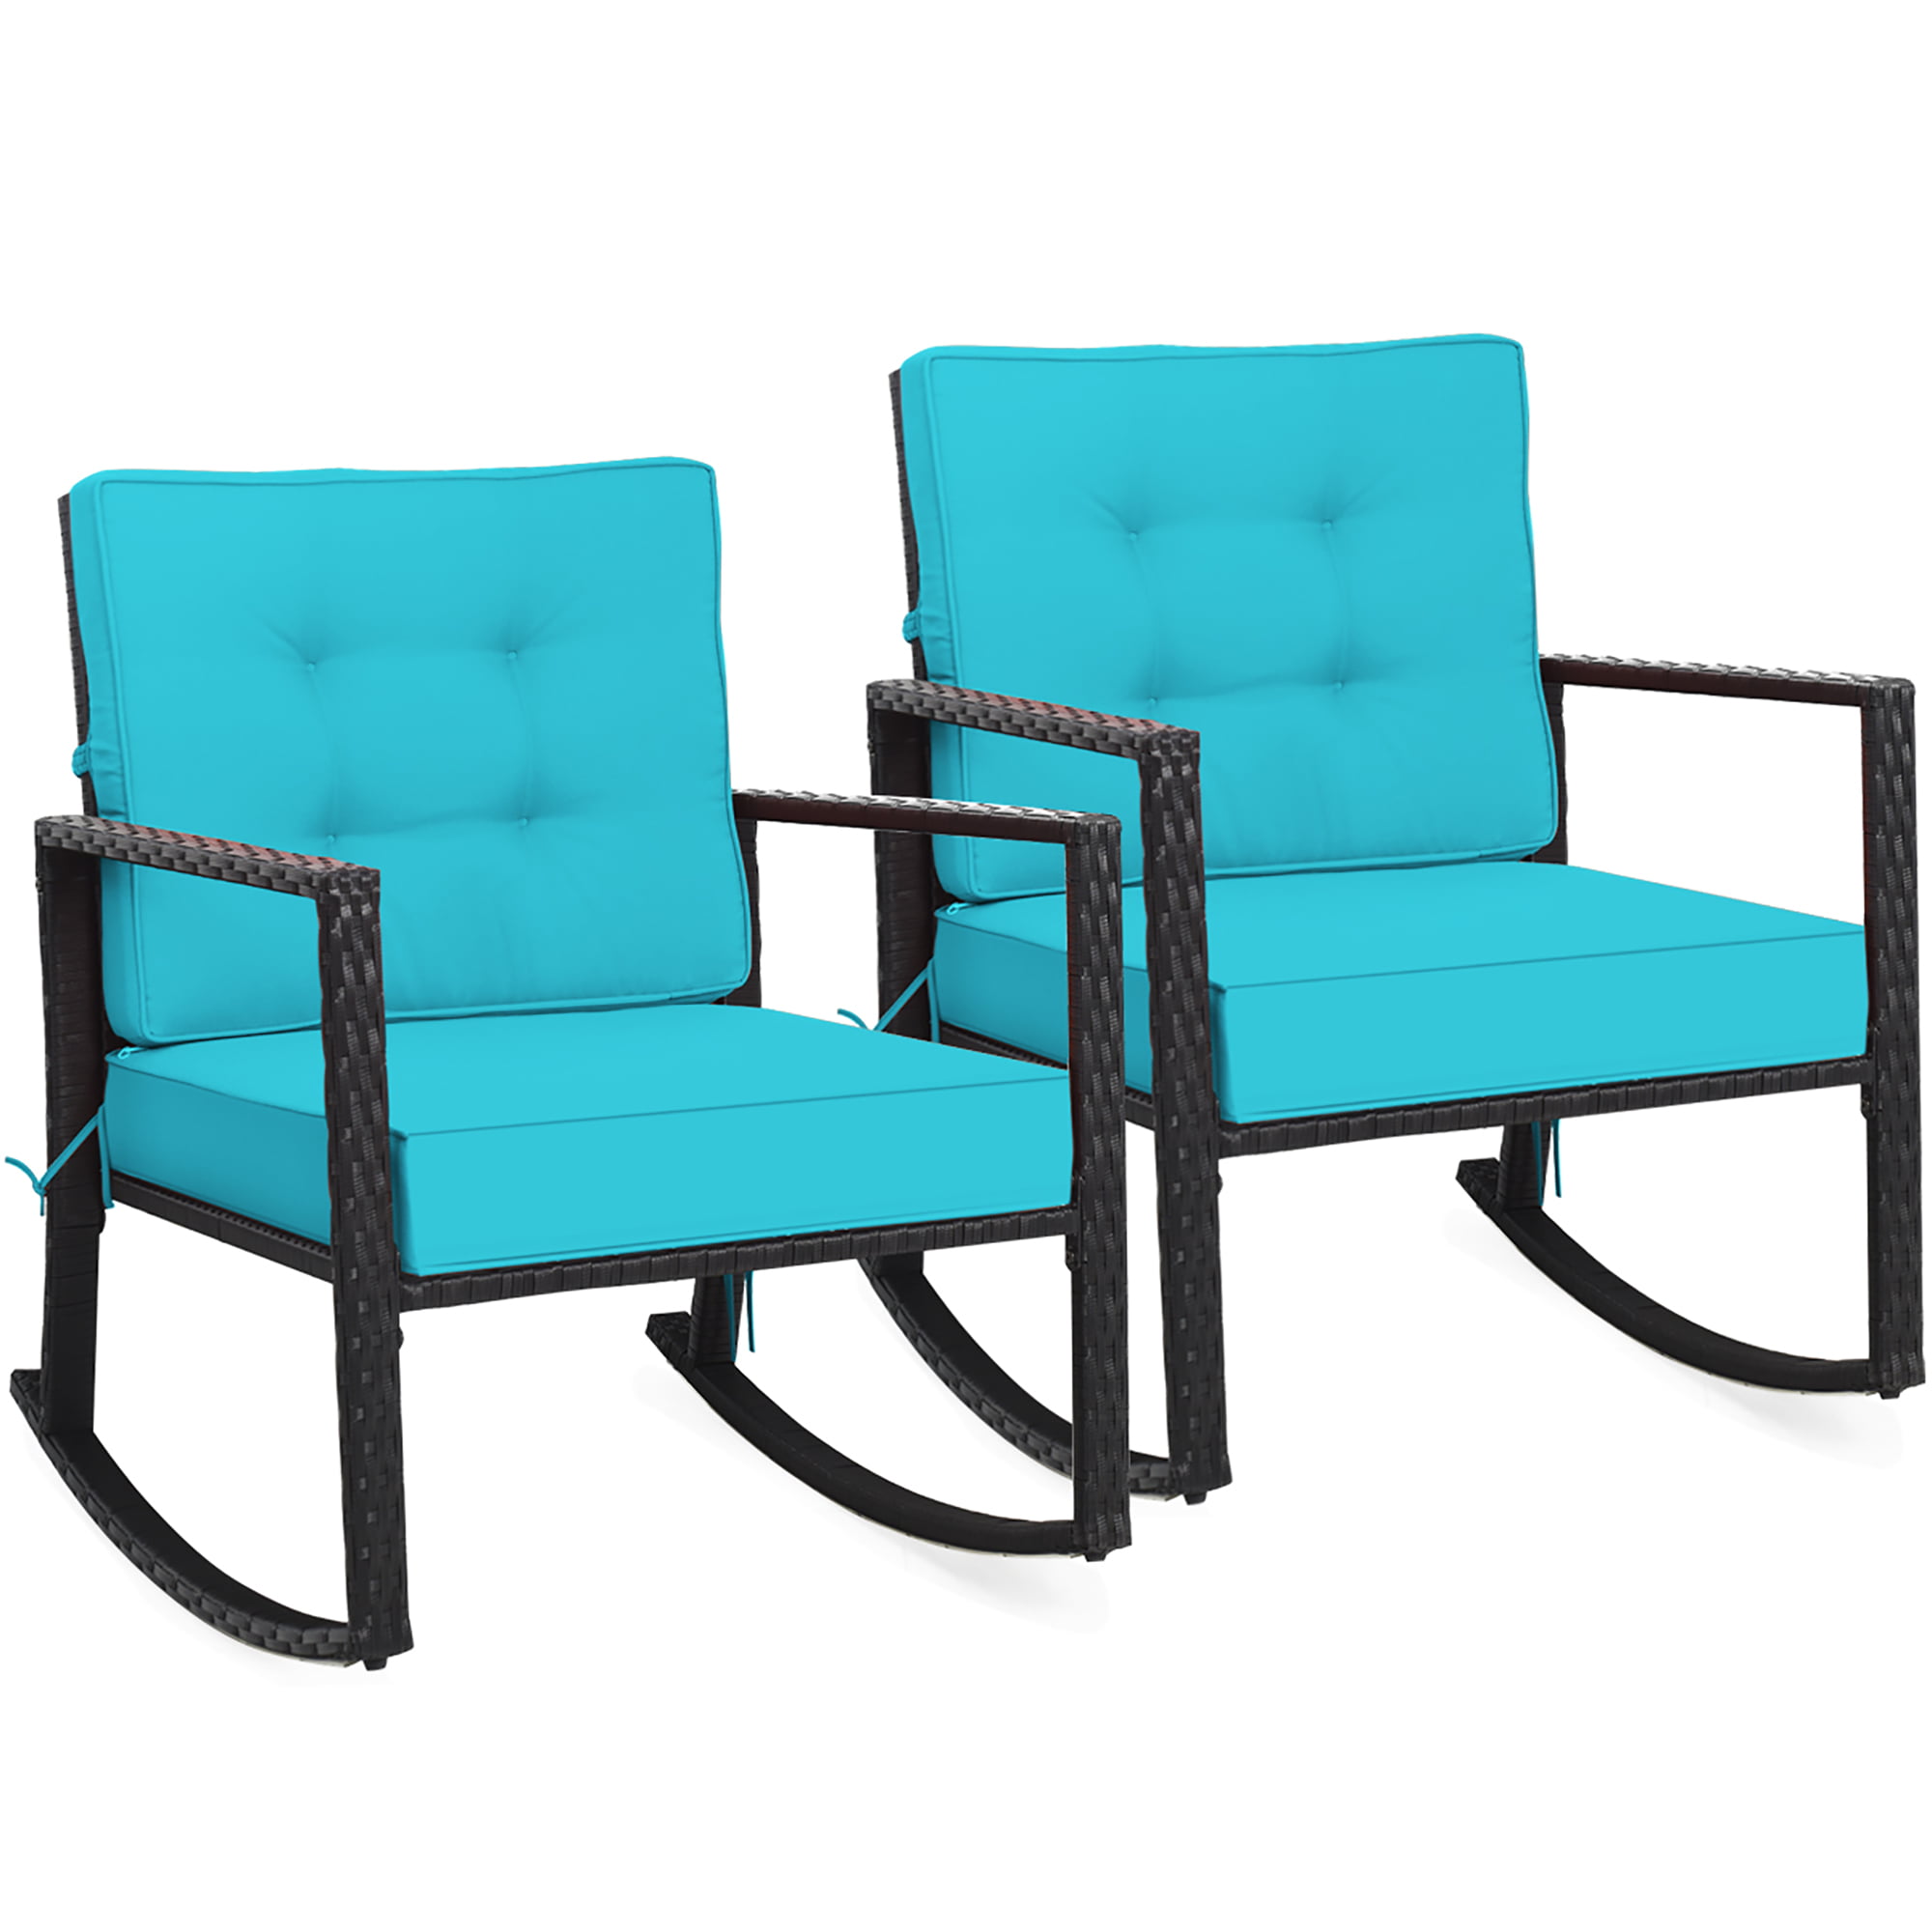 Unique Patio Chairs Walmart Canada for Simple Design